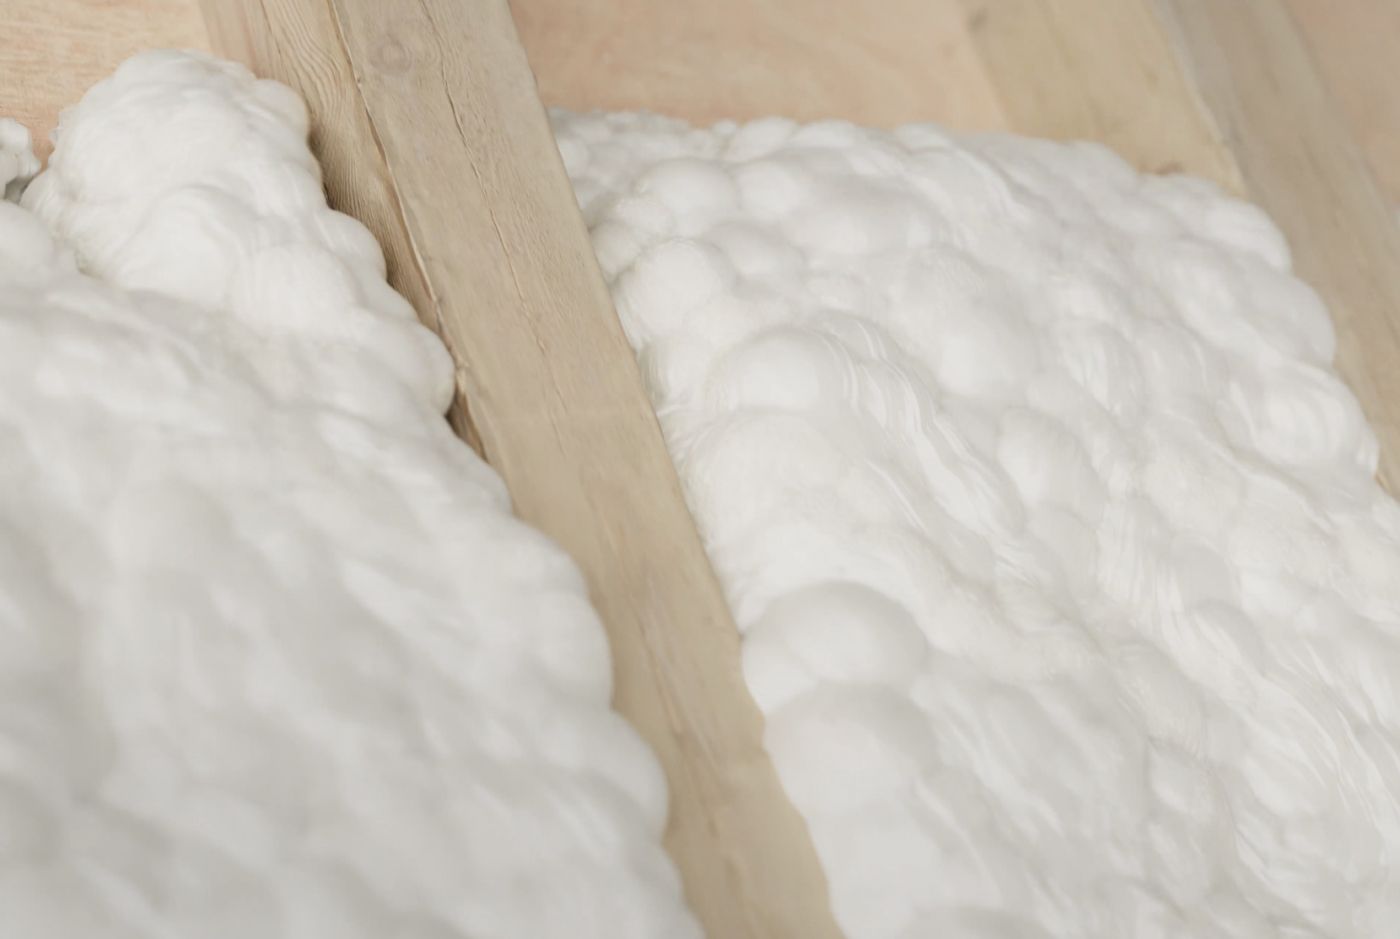 HBS spray foam insulation product shot